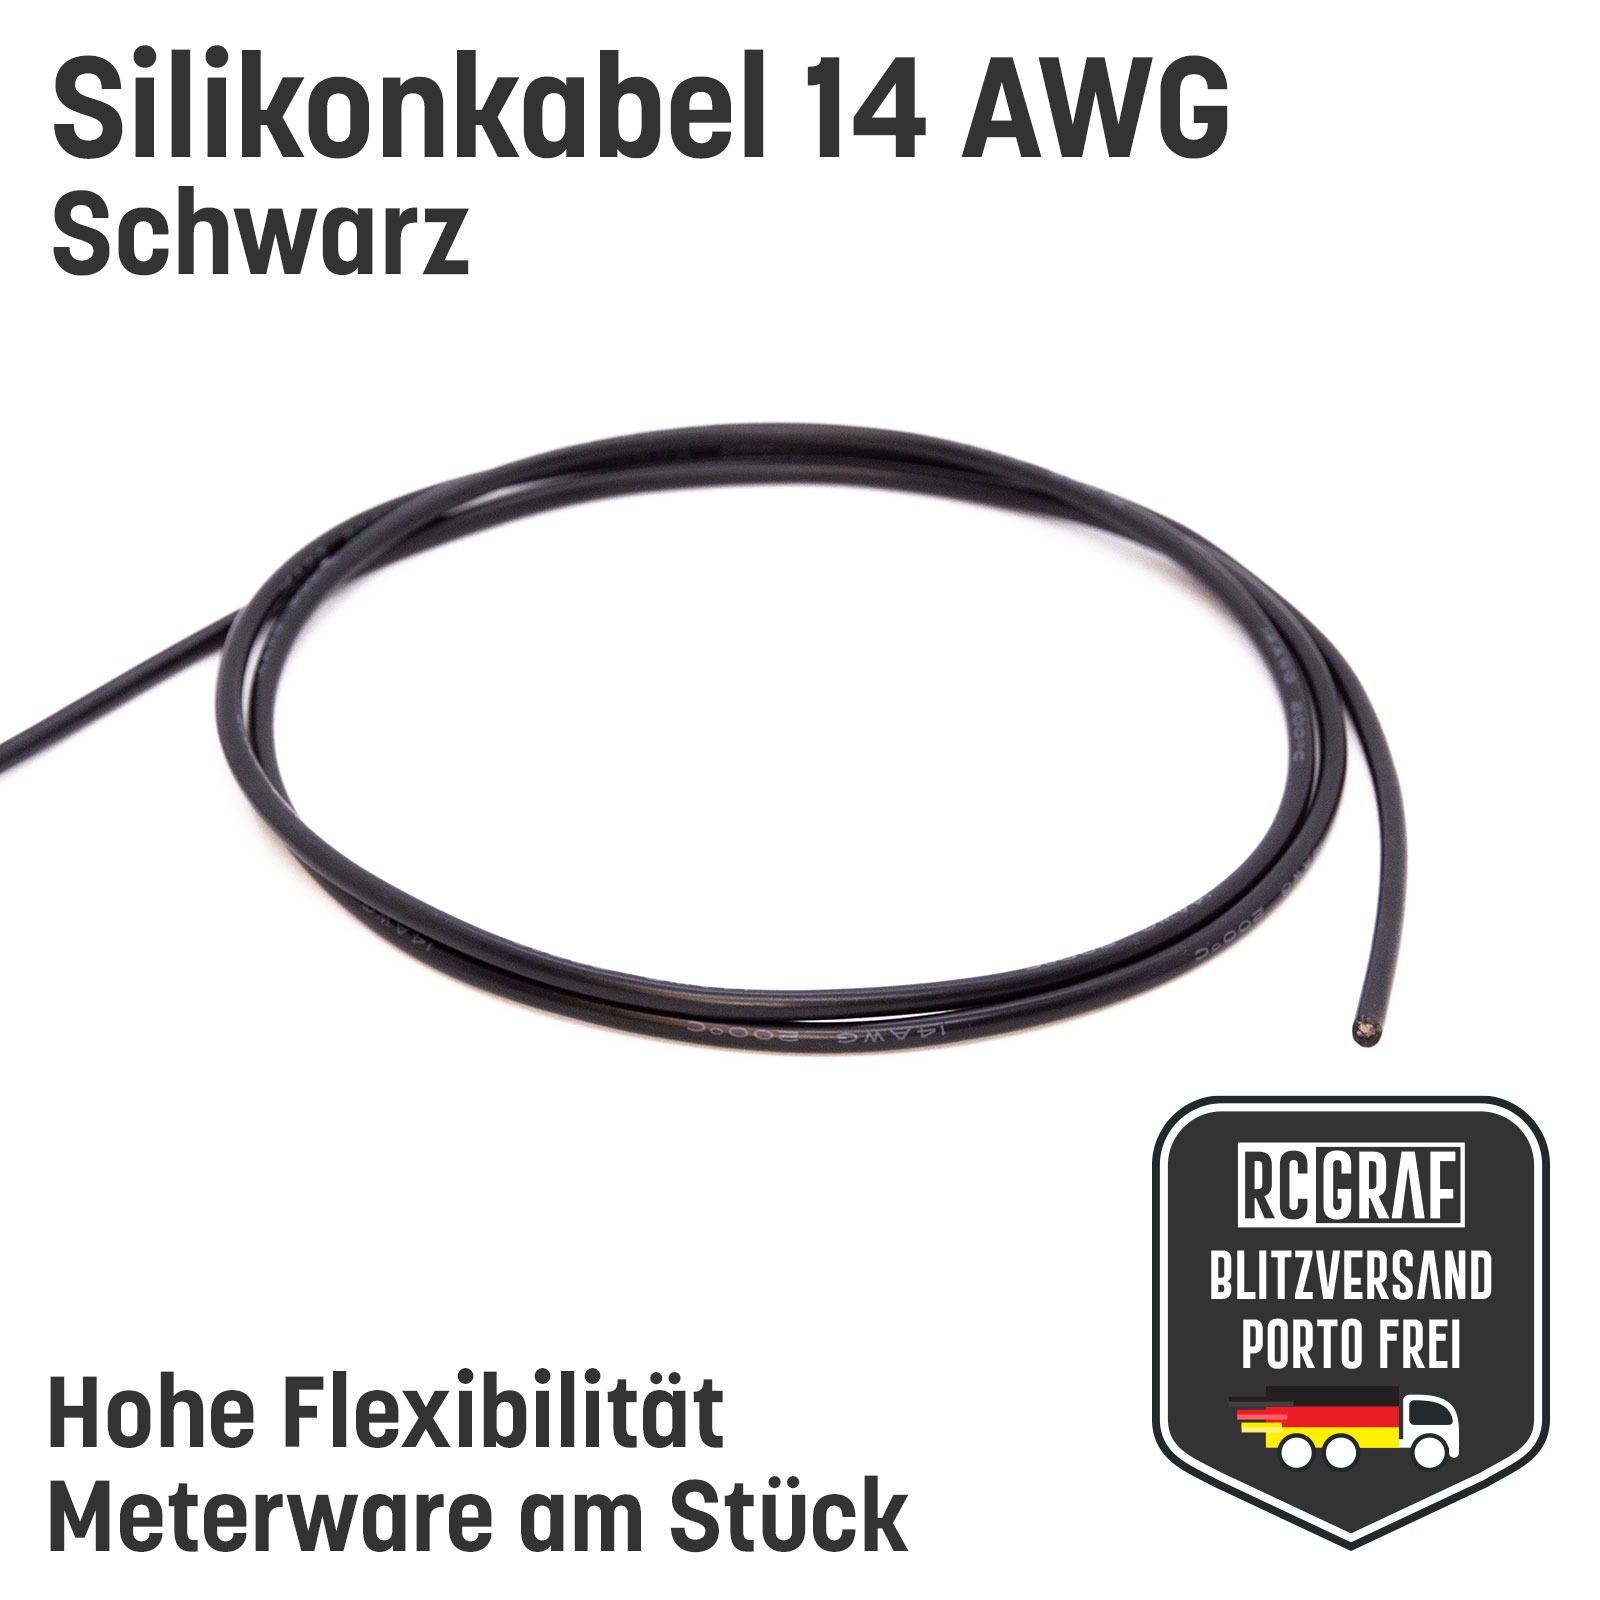 Silikonkabel 14 AWG 2 Meter Schwarz hochflexibel